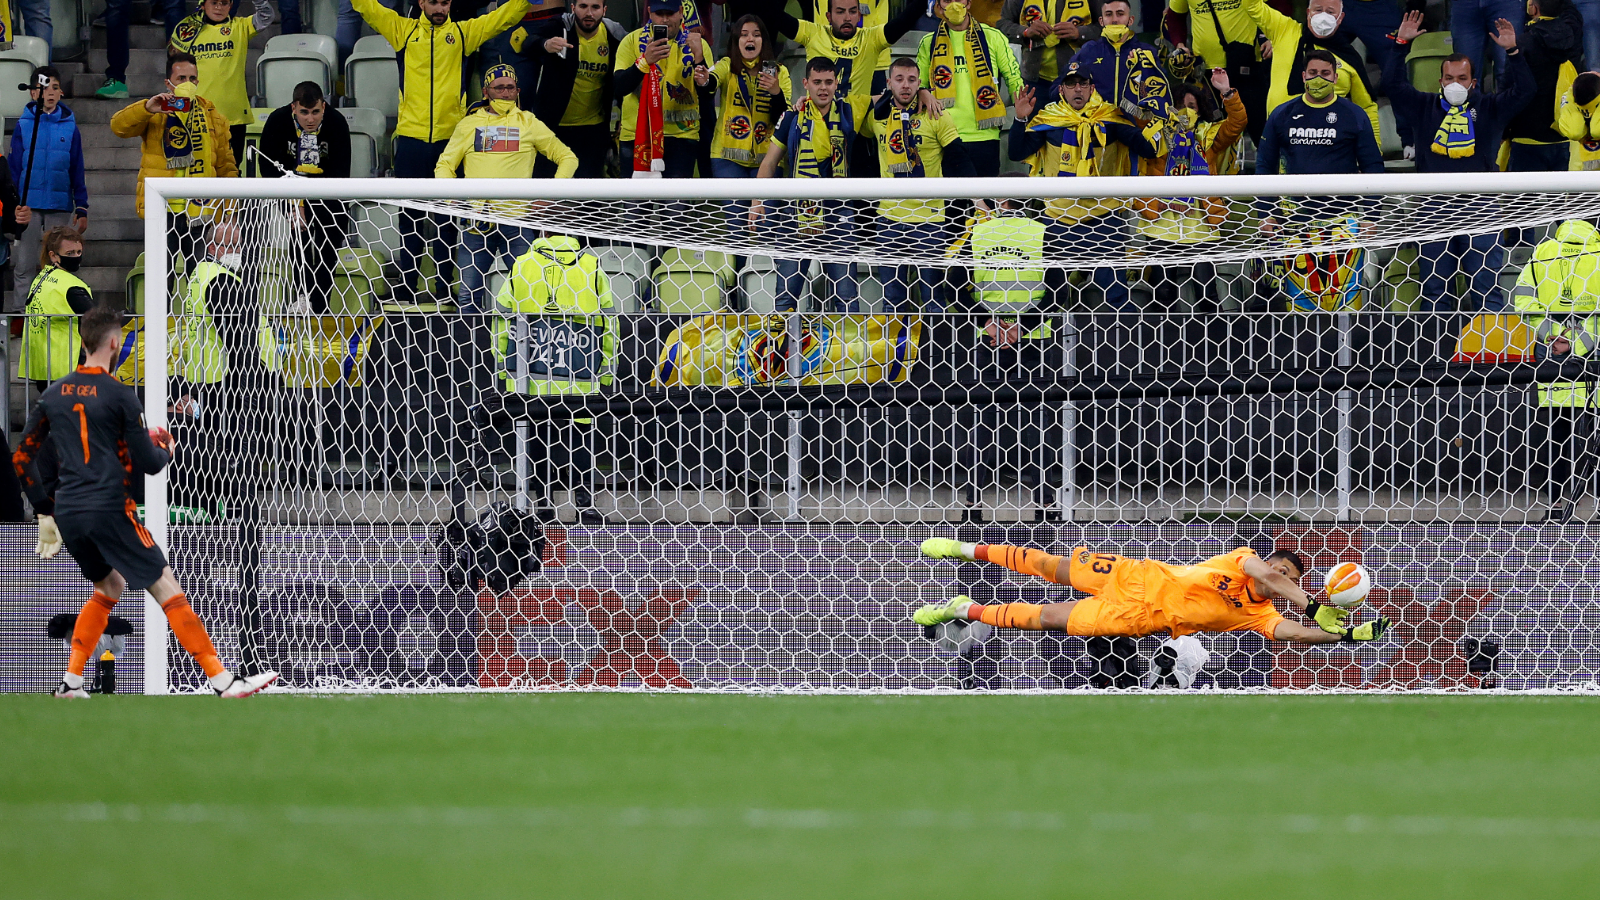 Villarreal - Manchester United (1-1 a.p., 11-10 t.a.b.) : Villarreal remporte la Ligue Europa au bout du suspense